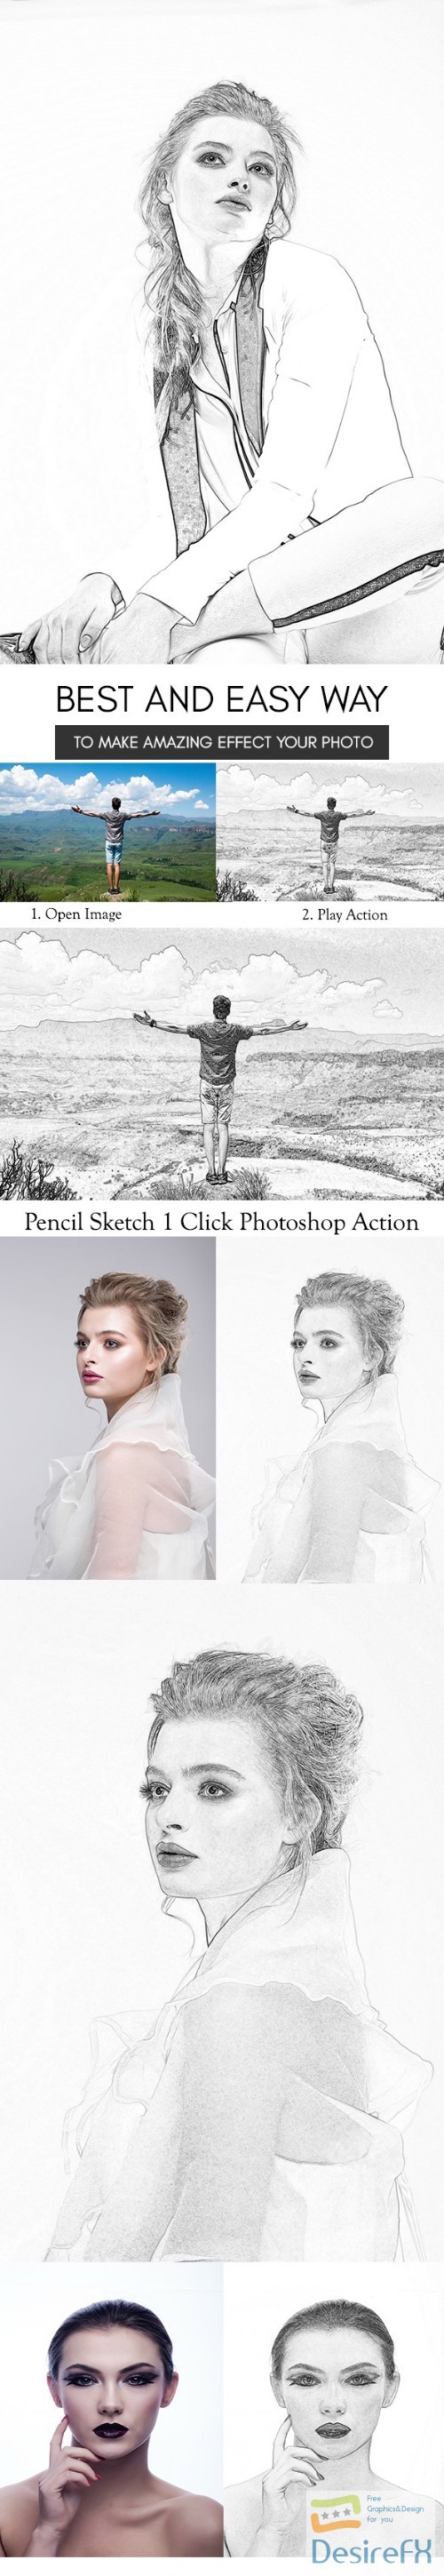 Pencil Skectch Photoshop Action 21901956